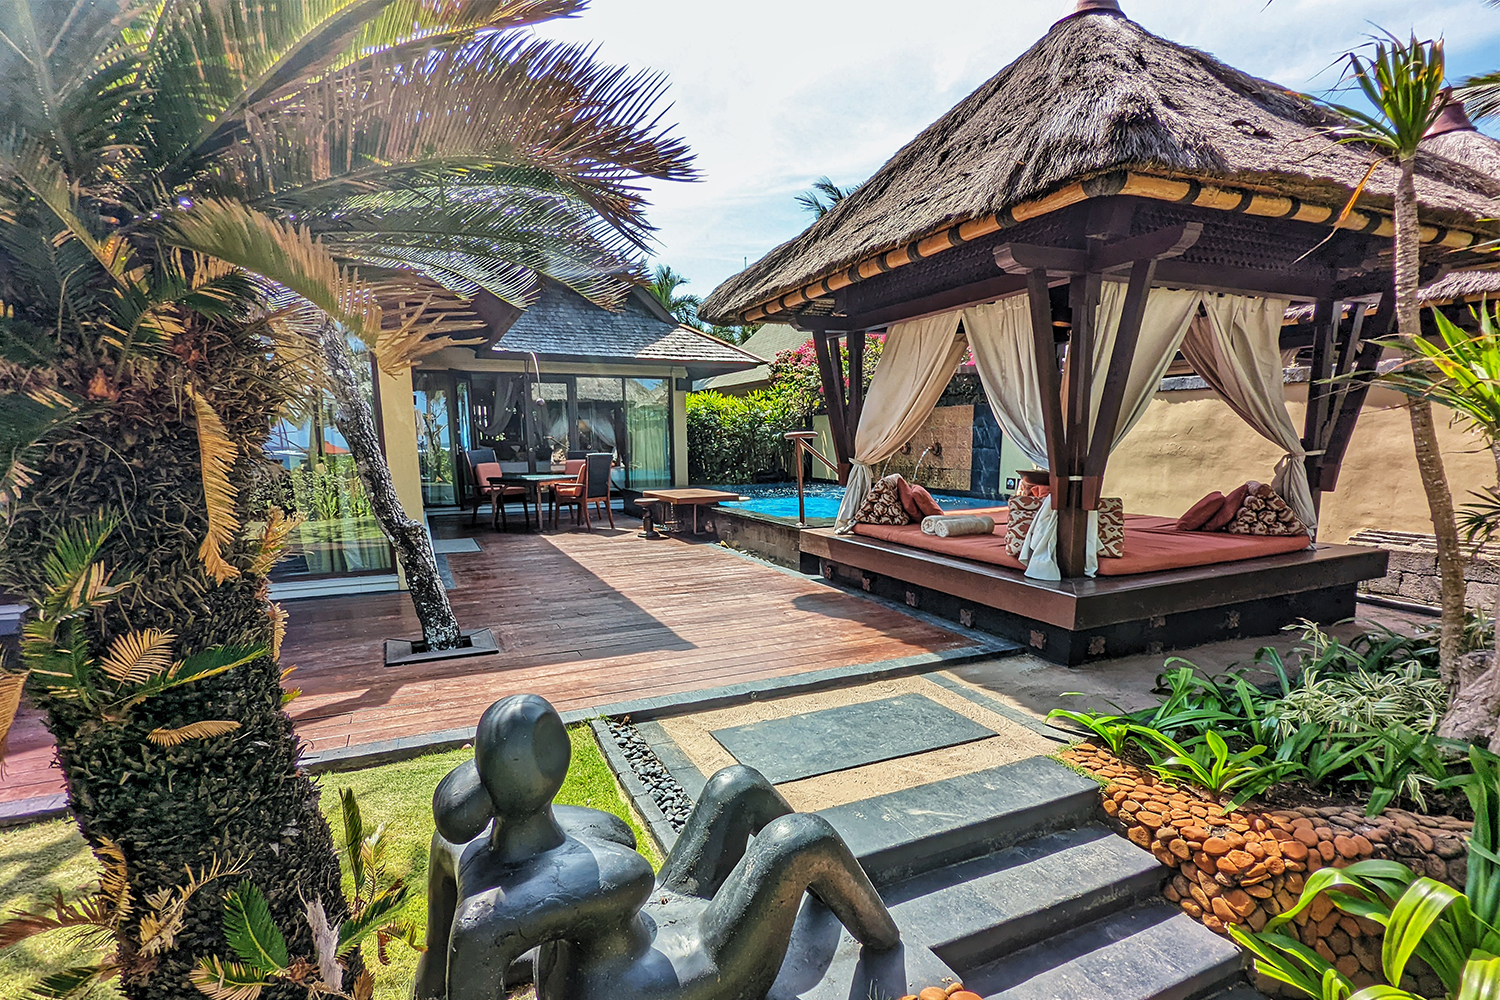 Accommodations at The St. Regis Bali Resort